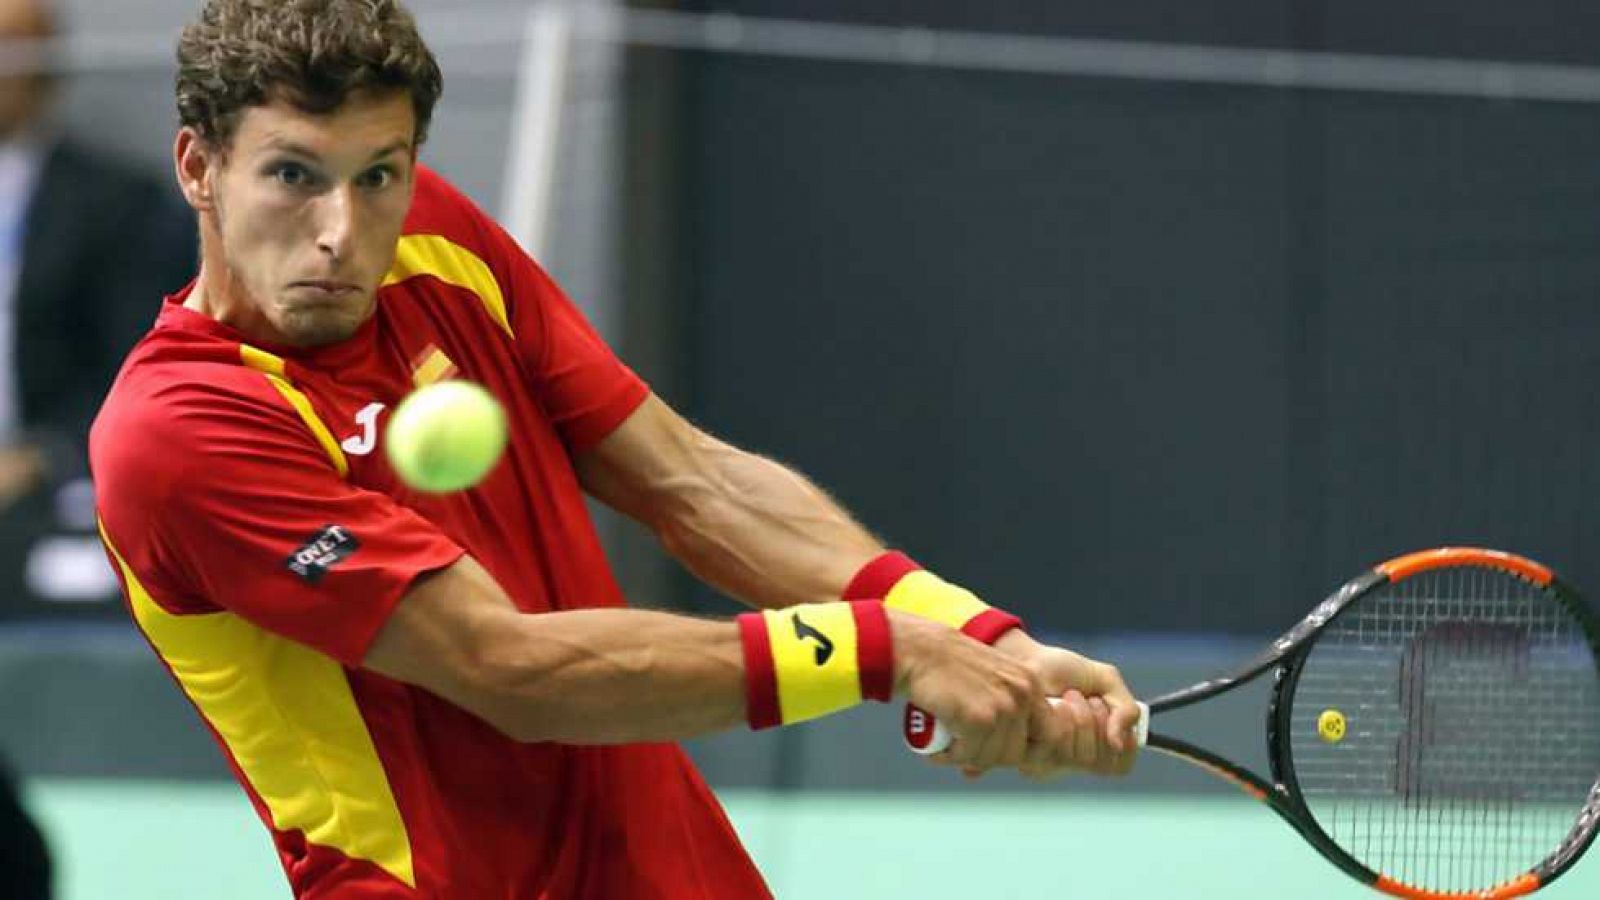 Tenis - Copa Davis 1ª Ronda Croacia-España: N. Mektic-P. Carreño Busta